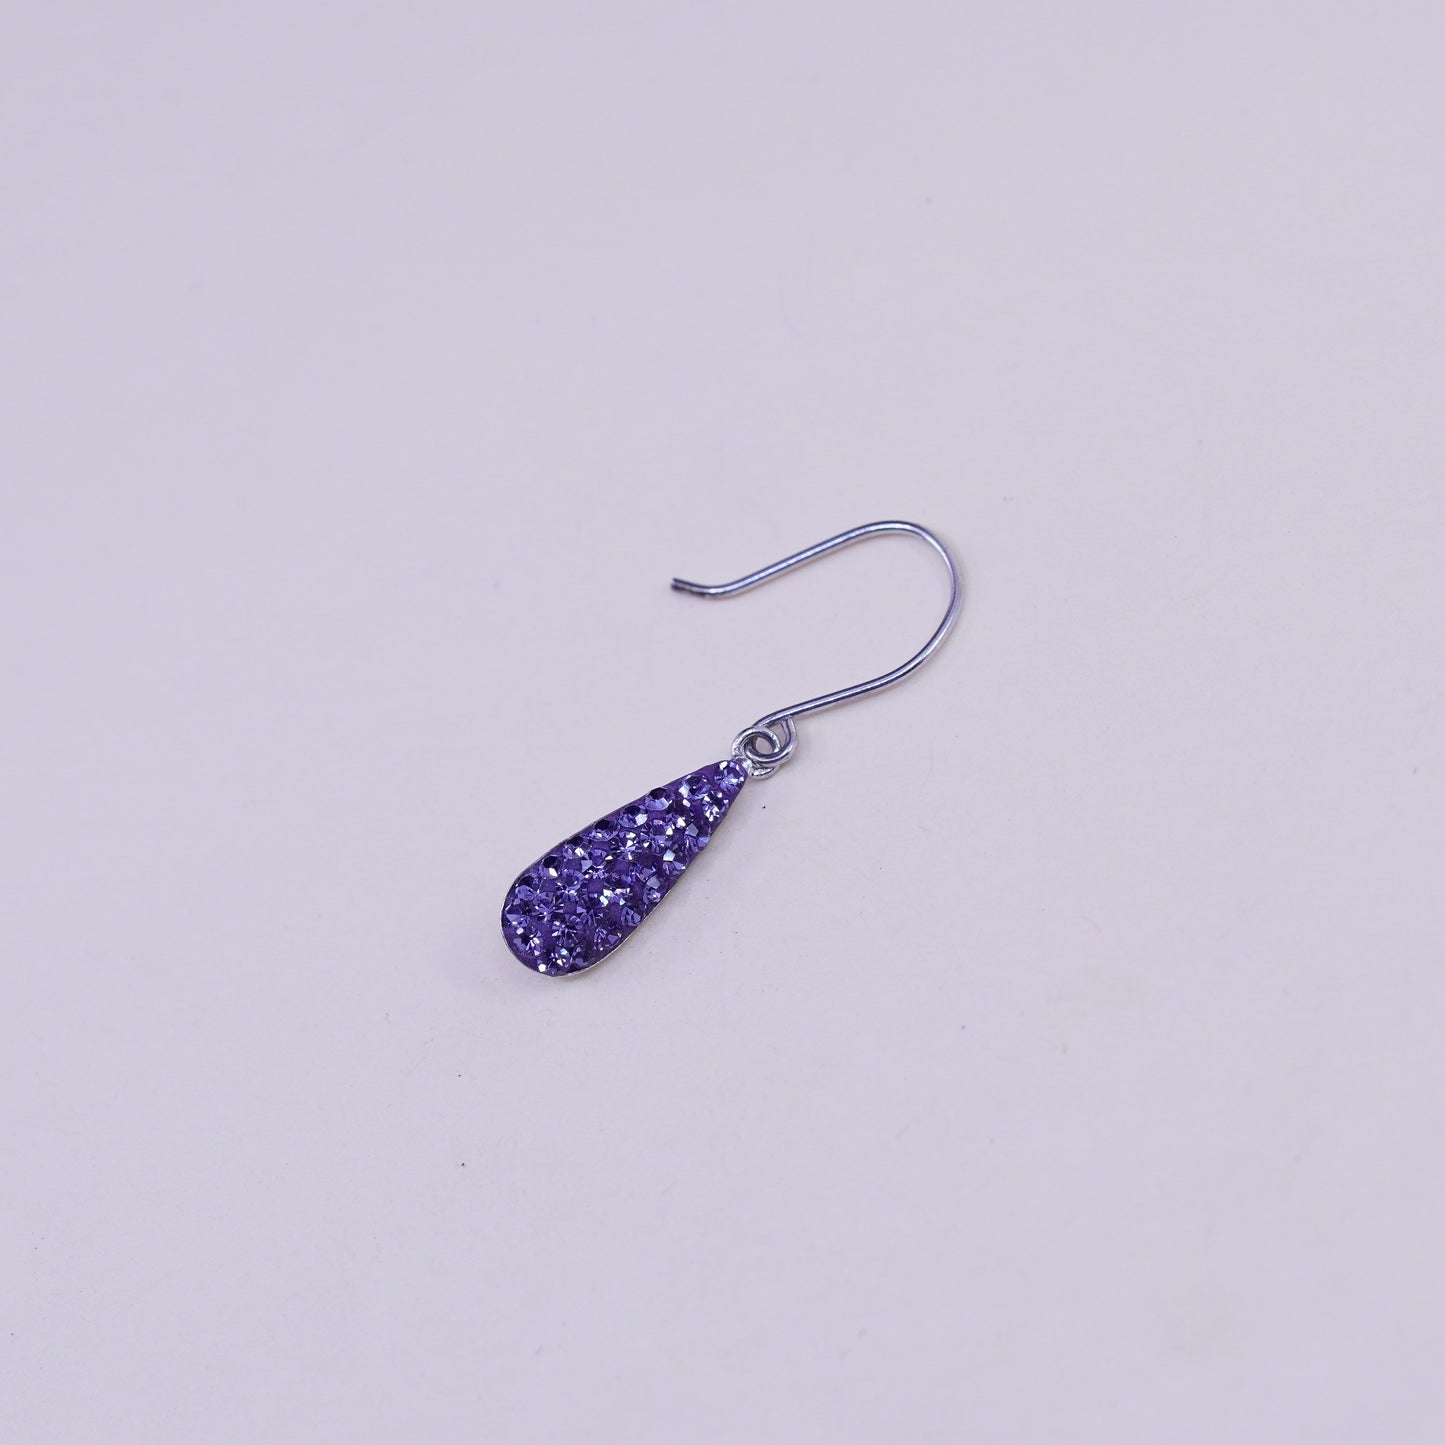 Vintage Sterling 925 silver handmade teardrop earrings with purple cluster cz